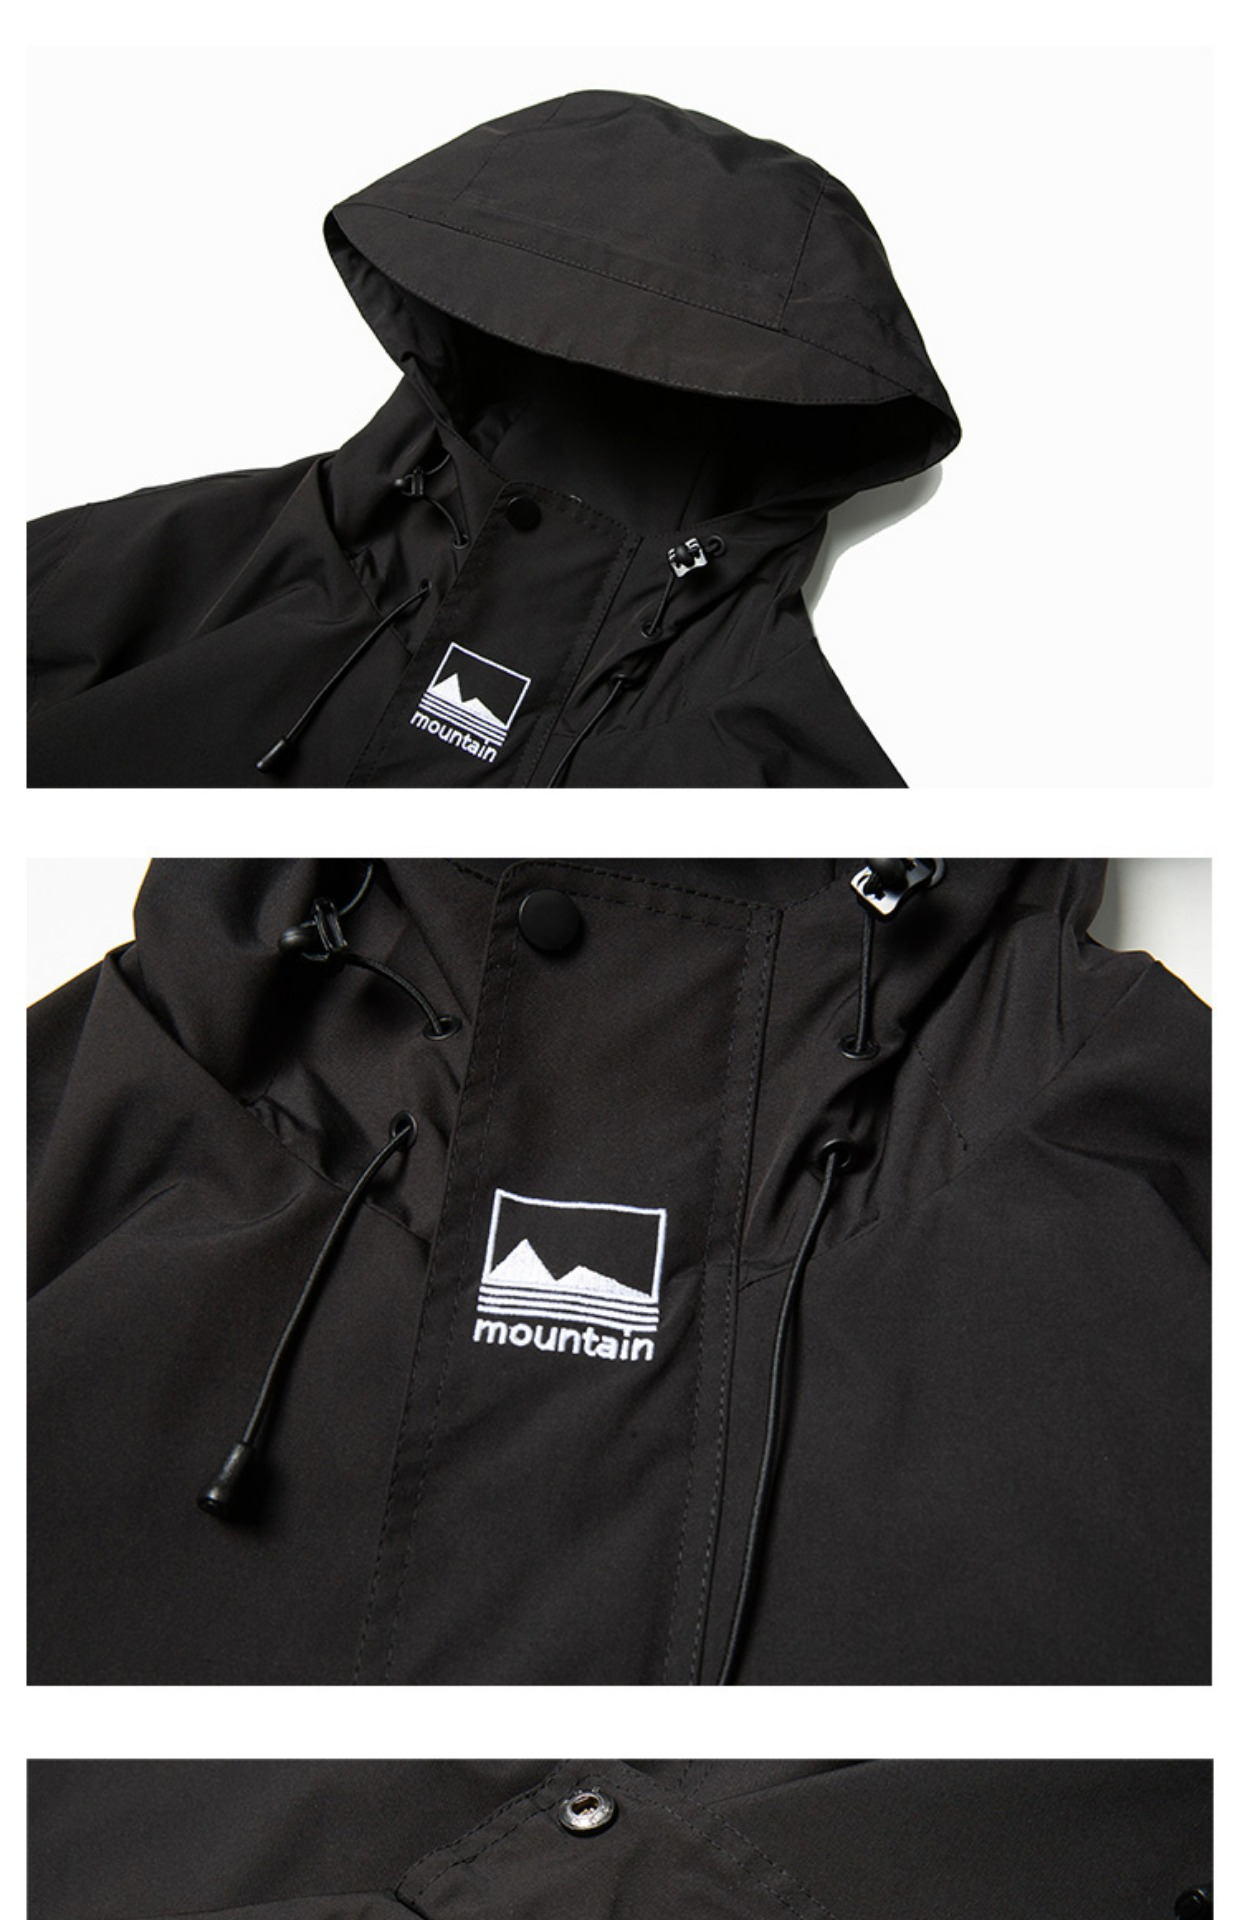 Mountain valley / FS-024 hooded rash jacket